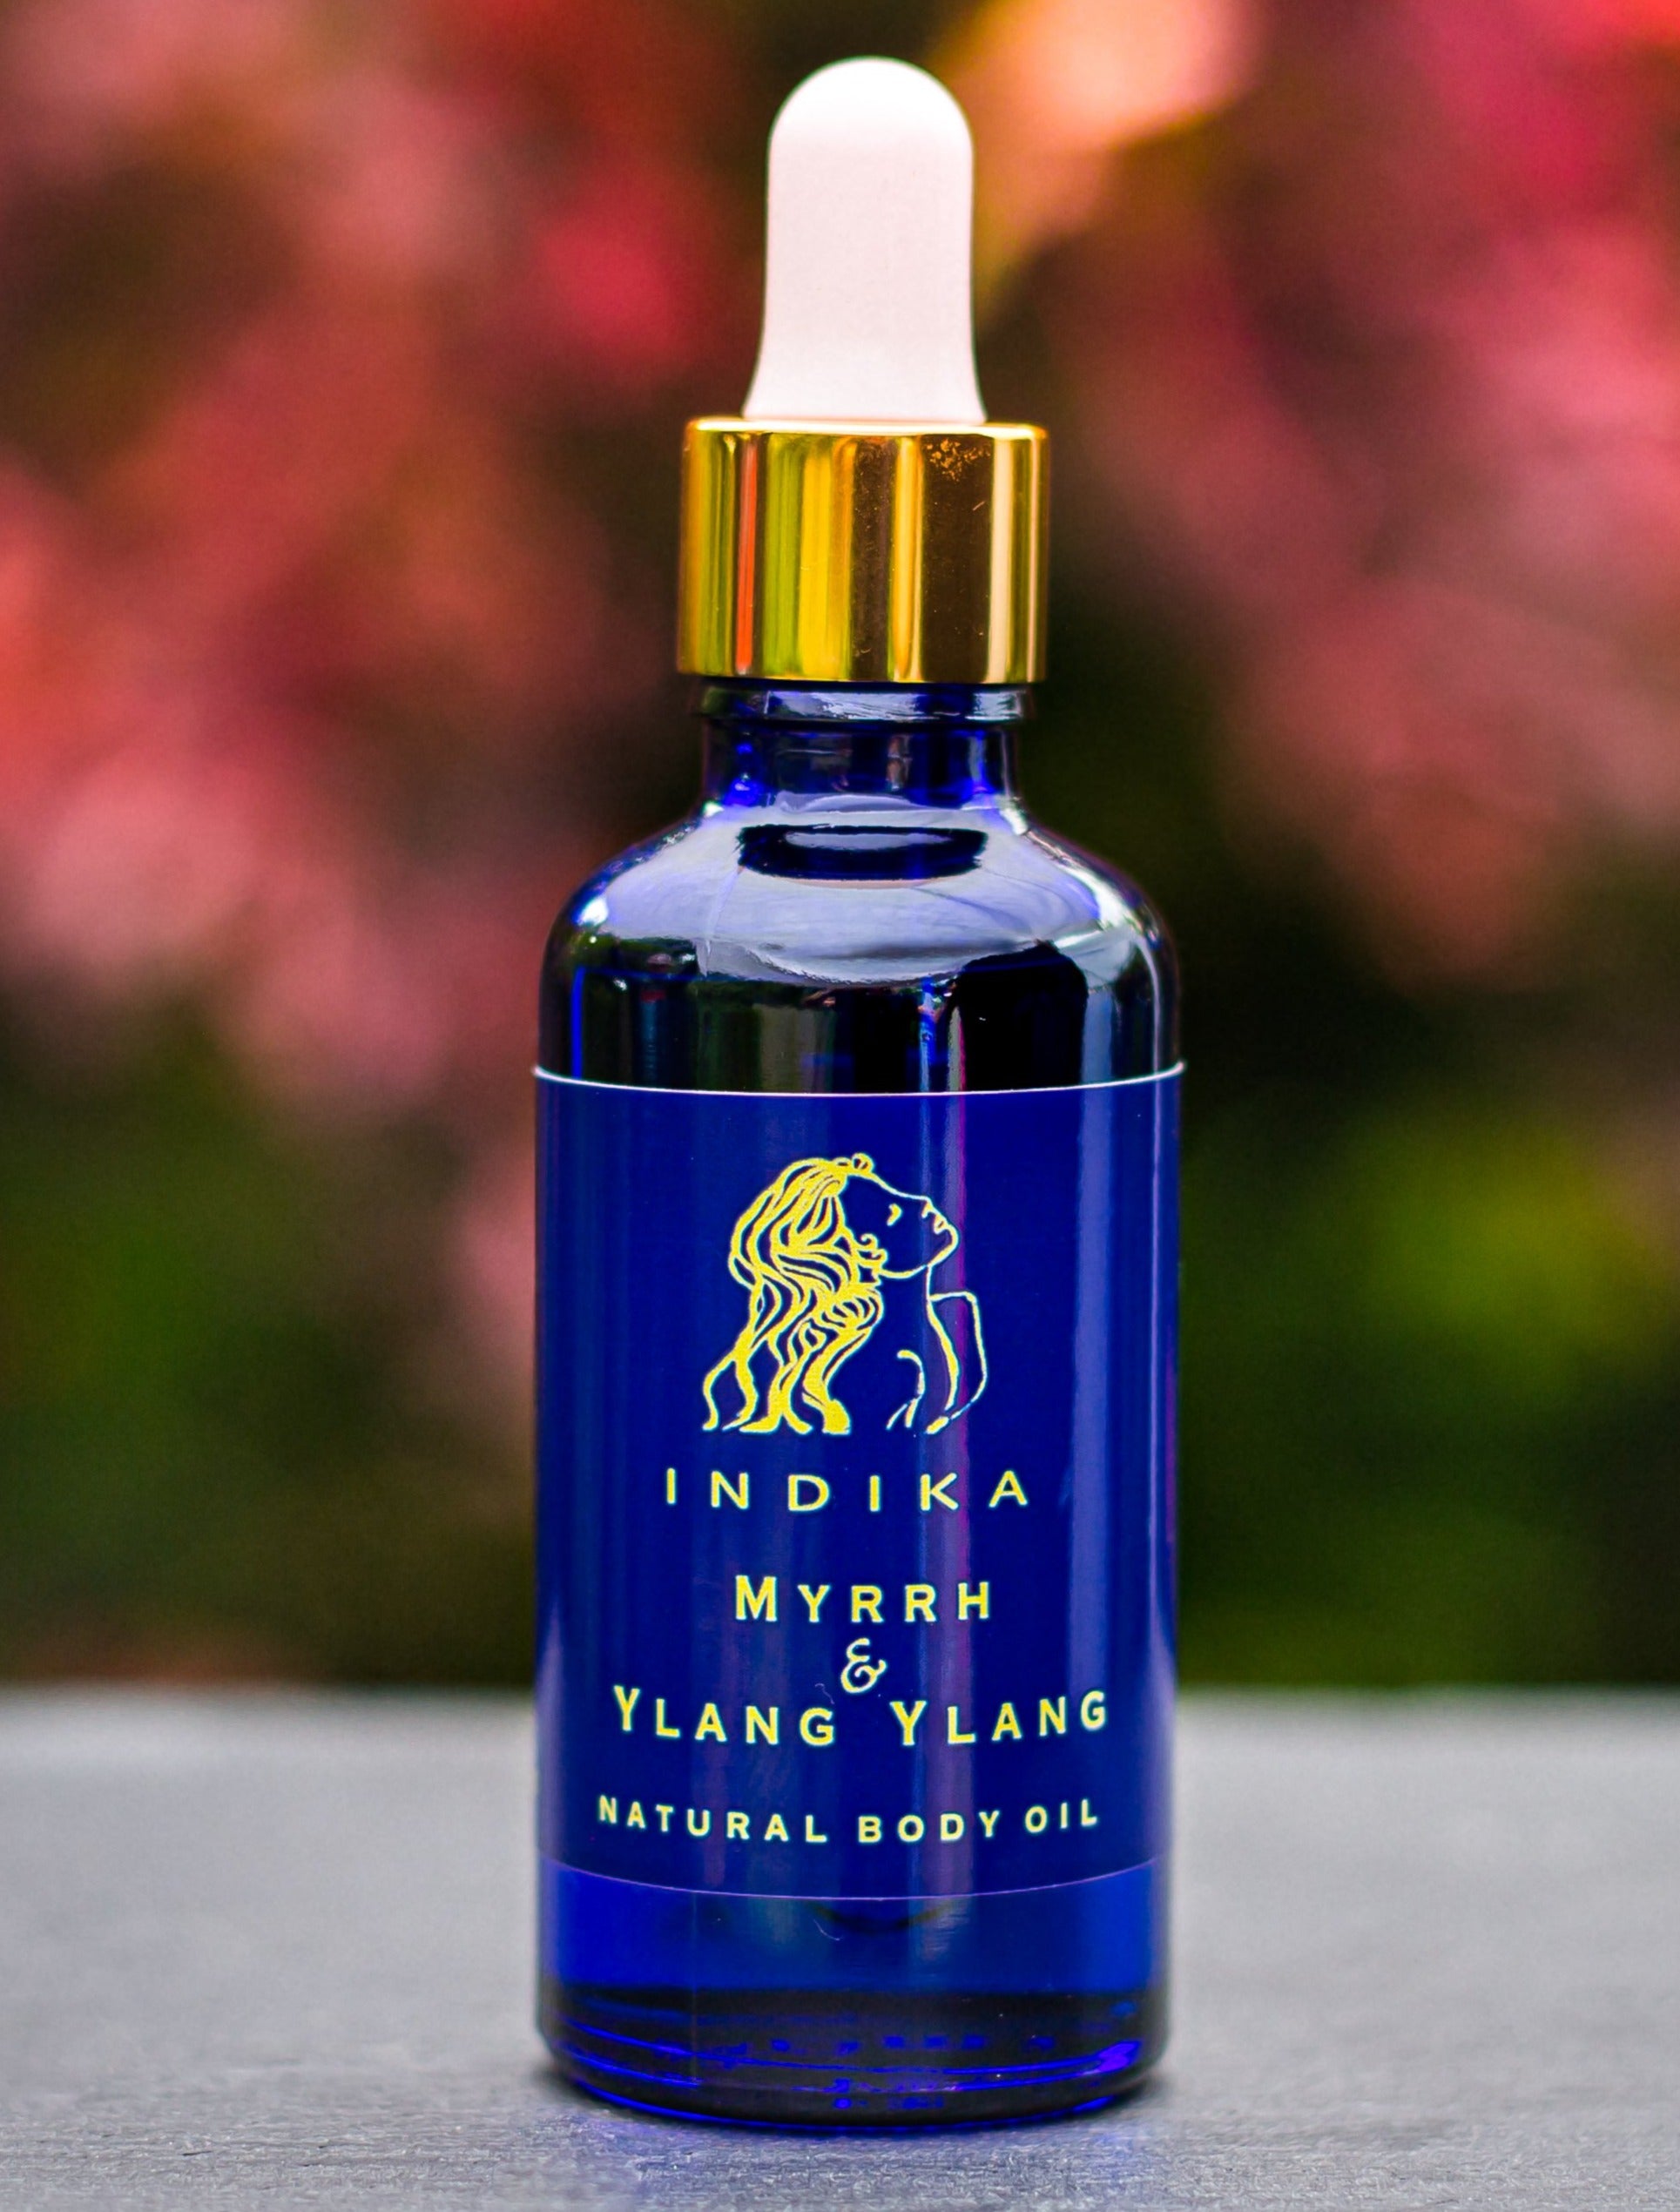 Myrrh & Ylang-Ylang Face and Body Oil